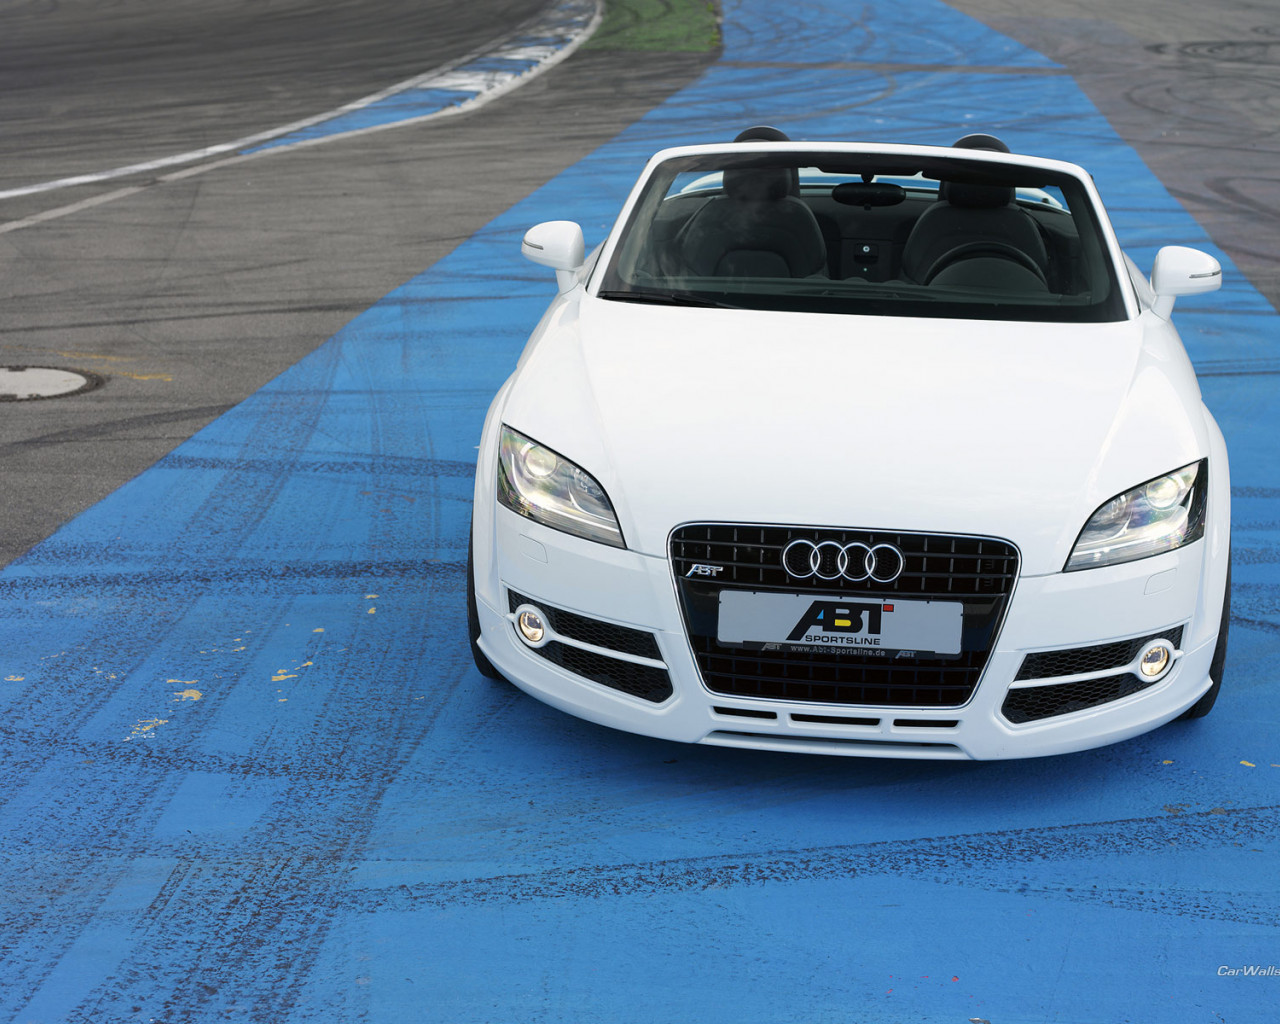 Audi_TT-ABT_519_1600x1200.jpg